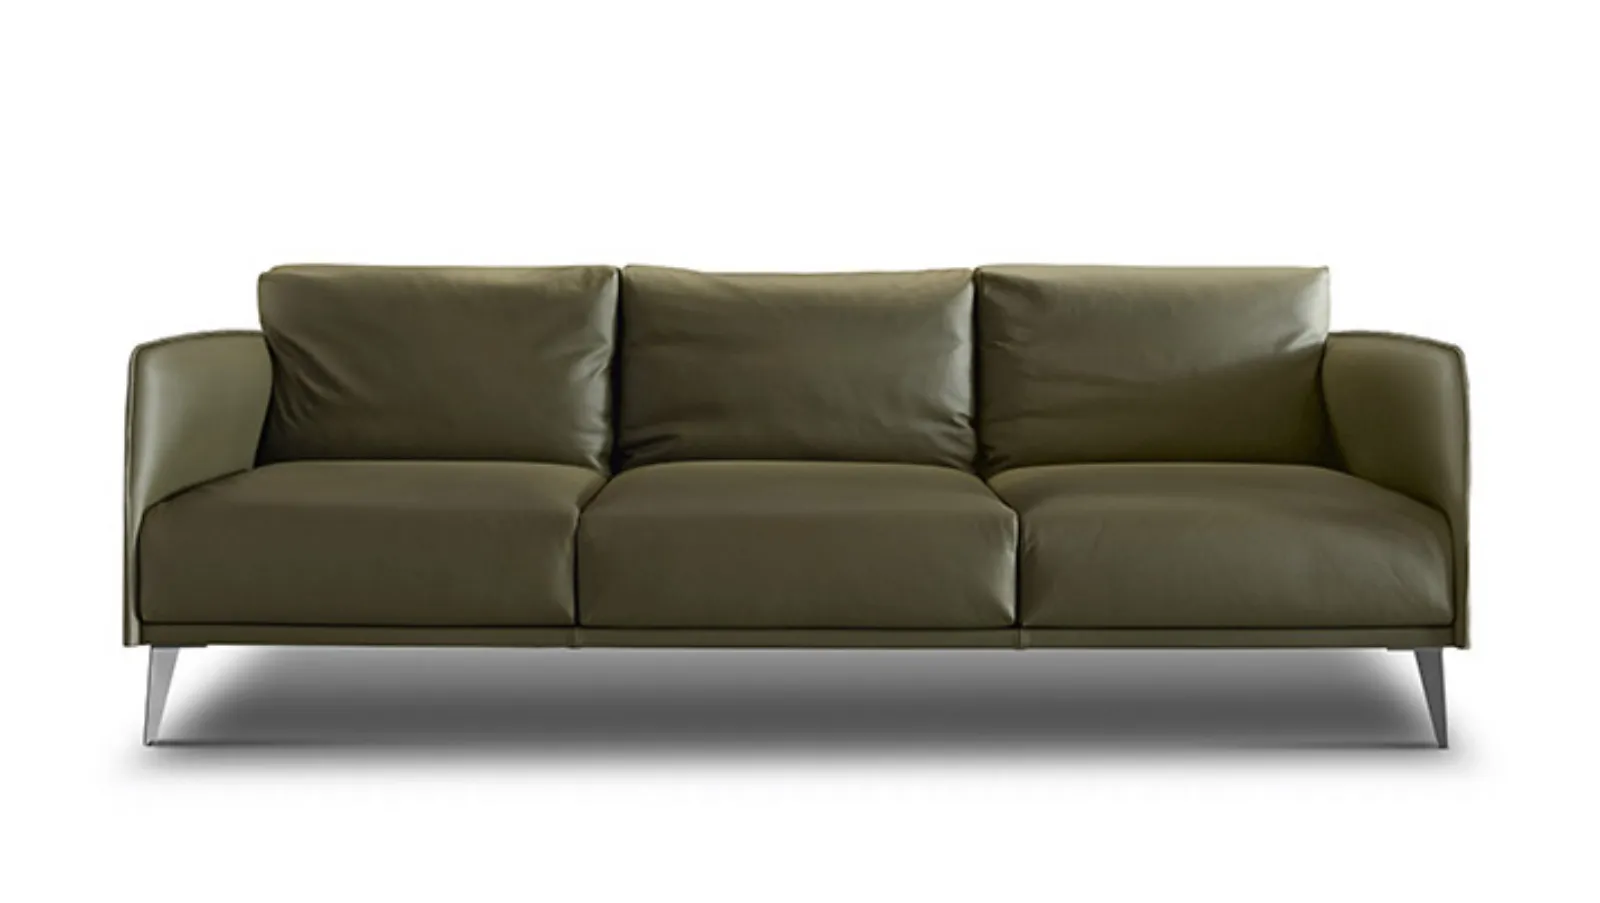 Stuart leather design sofa